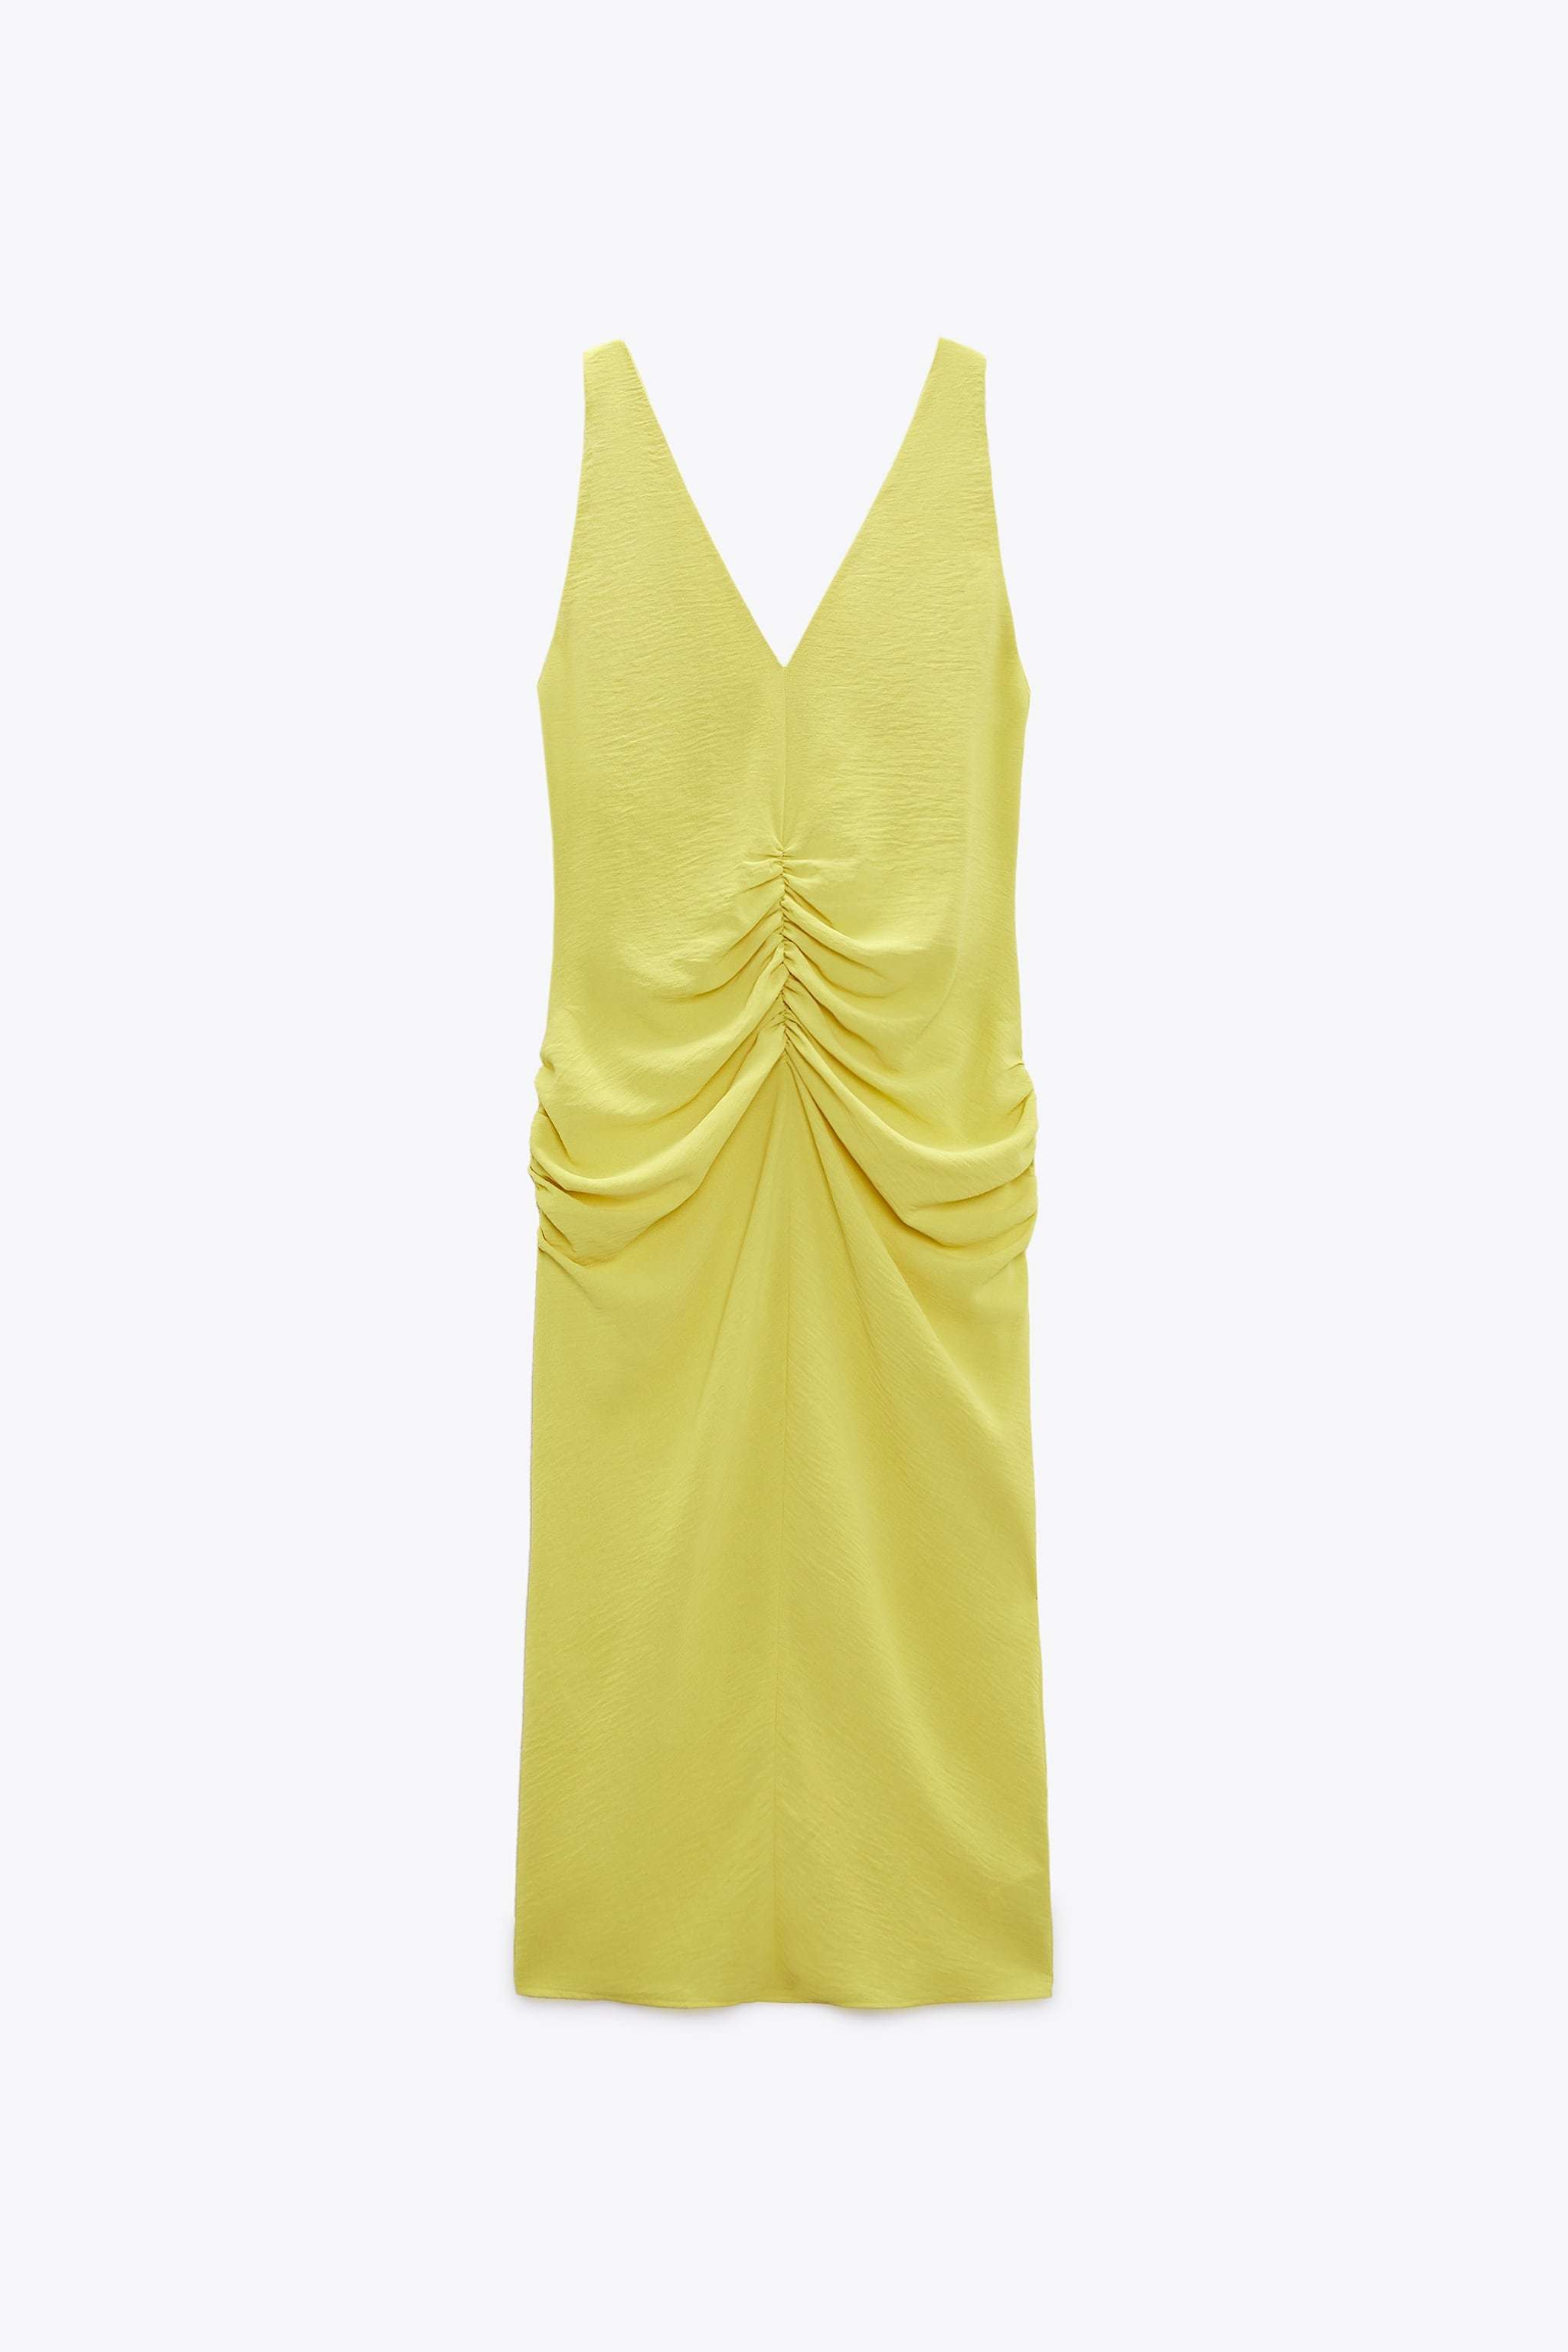 Vestido sin mangas amarillo, de Zara (25,95 euros).